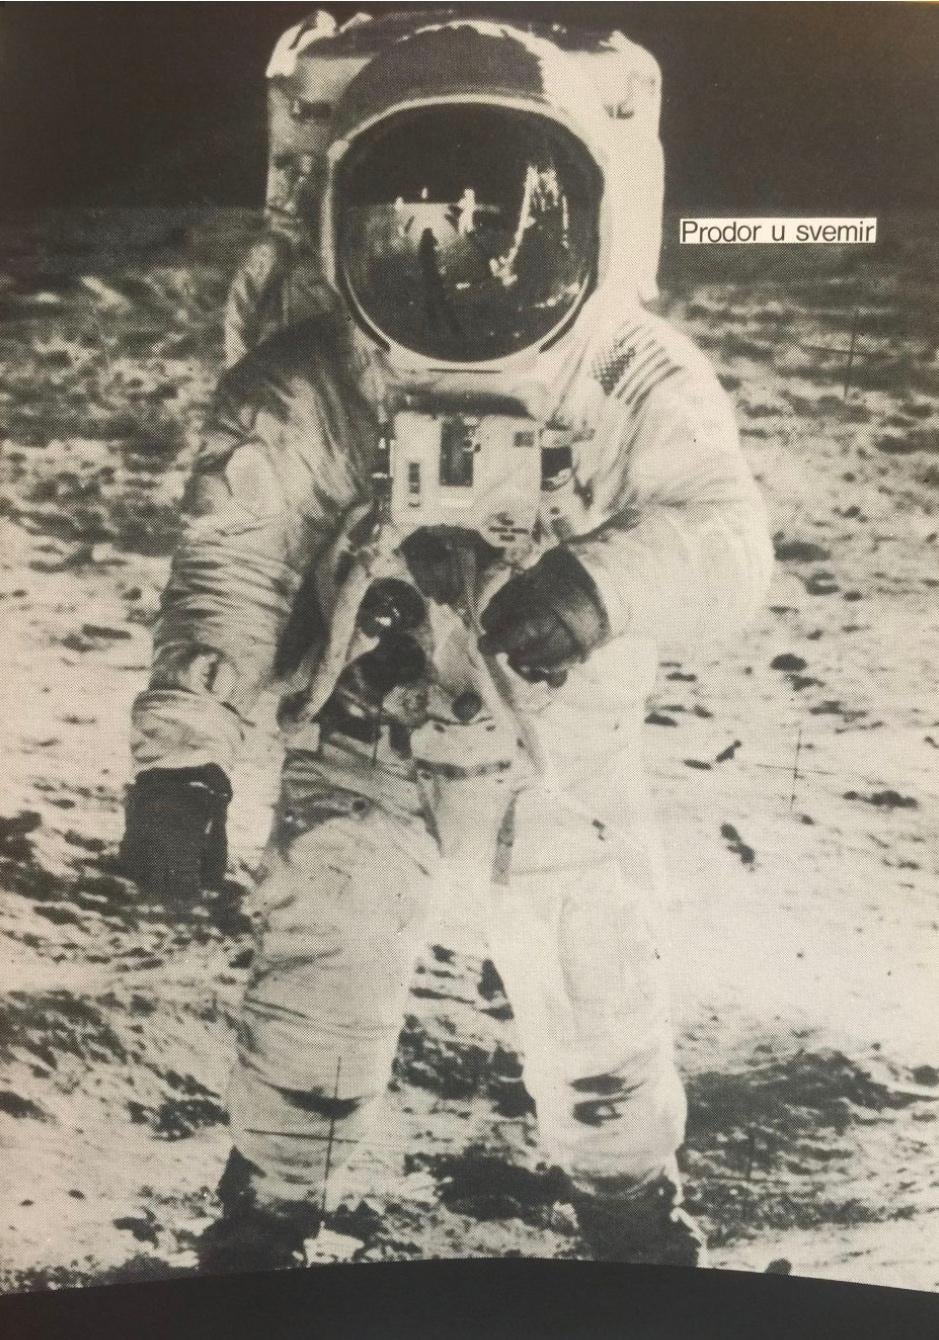 Original-Plakat, Boris Bucan 'PRODOR U SVEMIR' Astronaut, 1972 

Künstler 
Boris Bucan

Jahr 
1972

Abmessungen 
88×48 cm

Bedingung 
Ausgezeichneter Condit

Format 
Unleinen kaschiert (schweres Papier)


